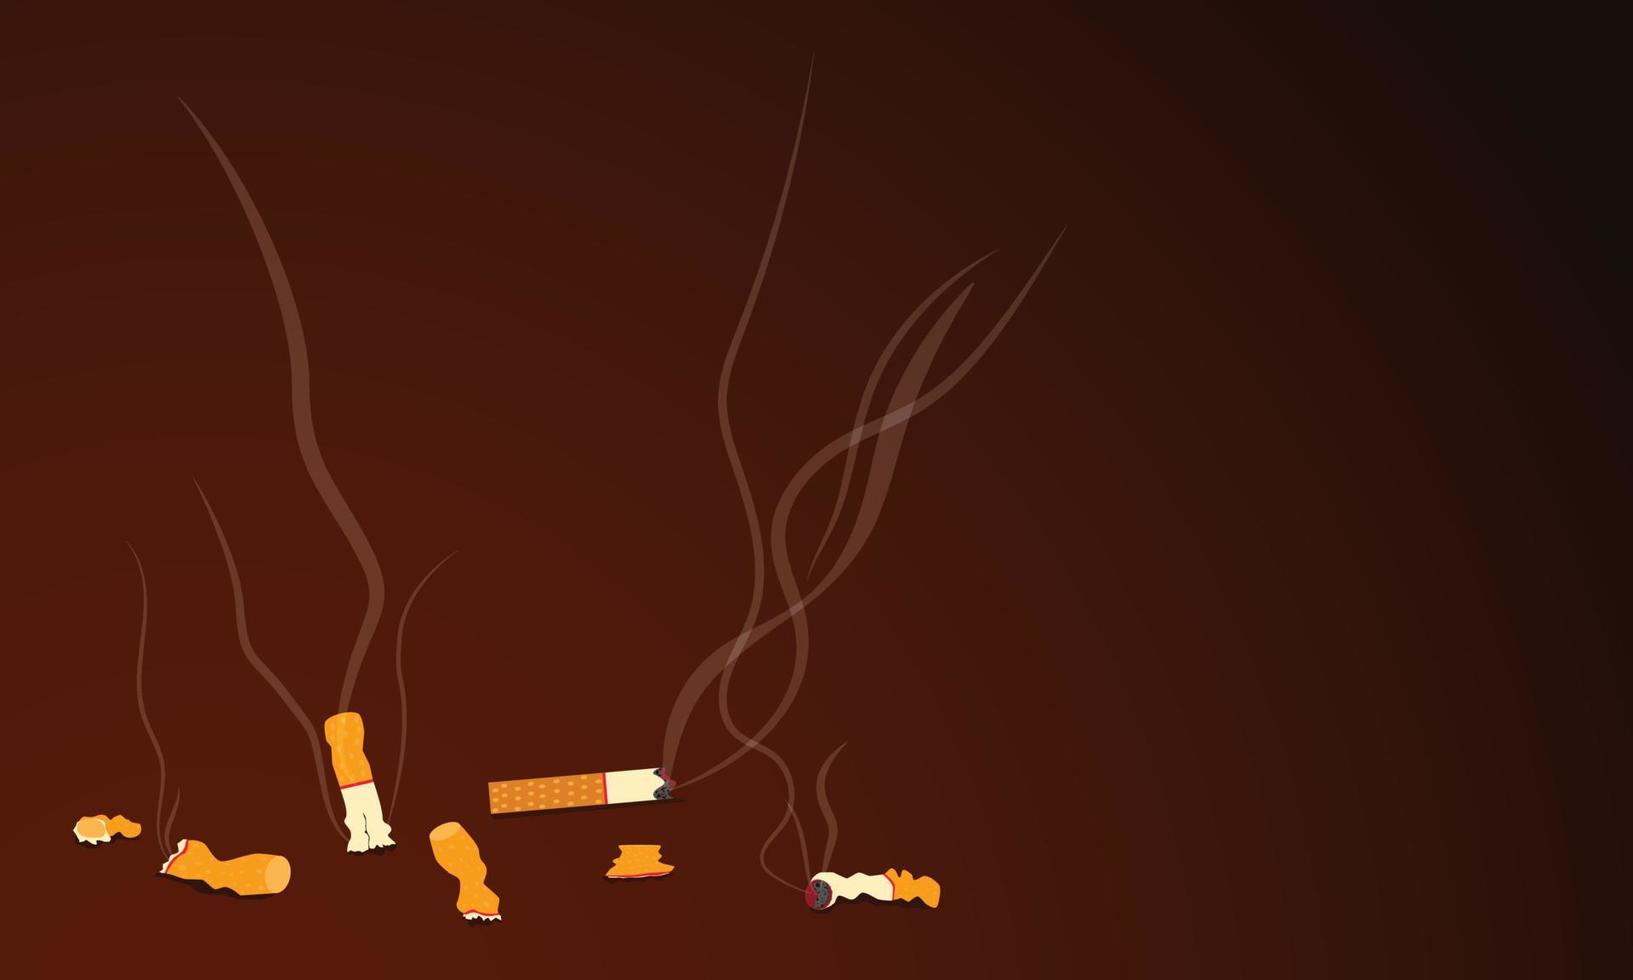 cugarette stub. dangerous to health kid other people. vector illustration eps10